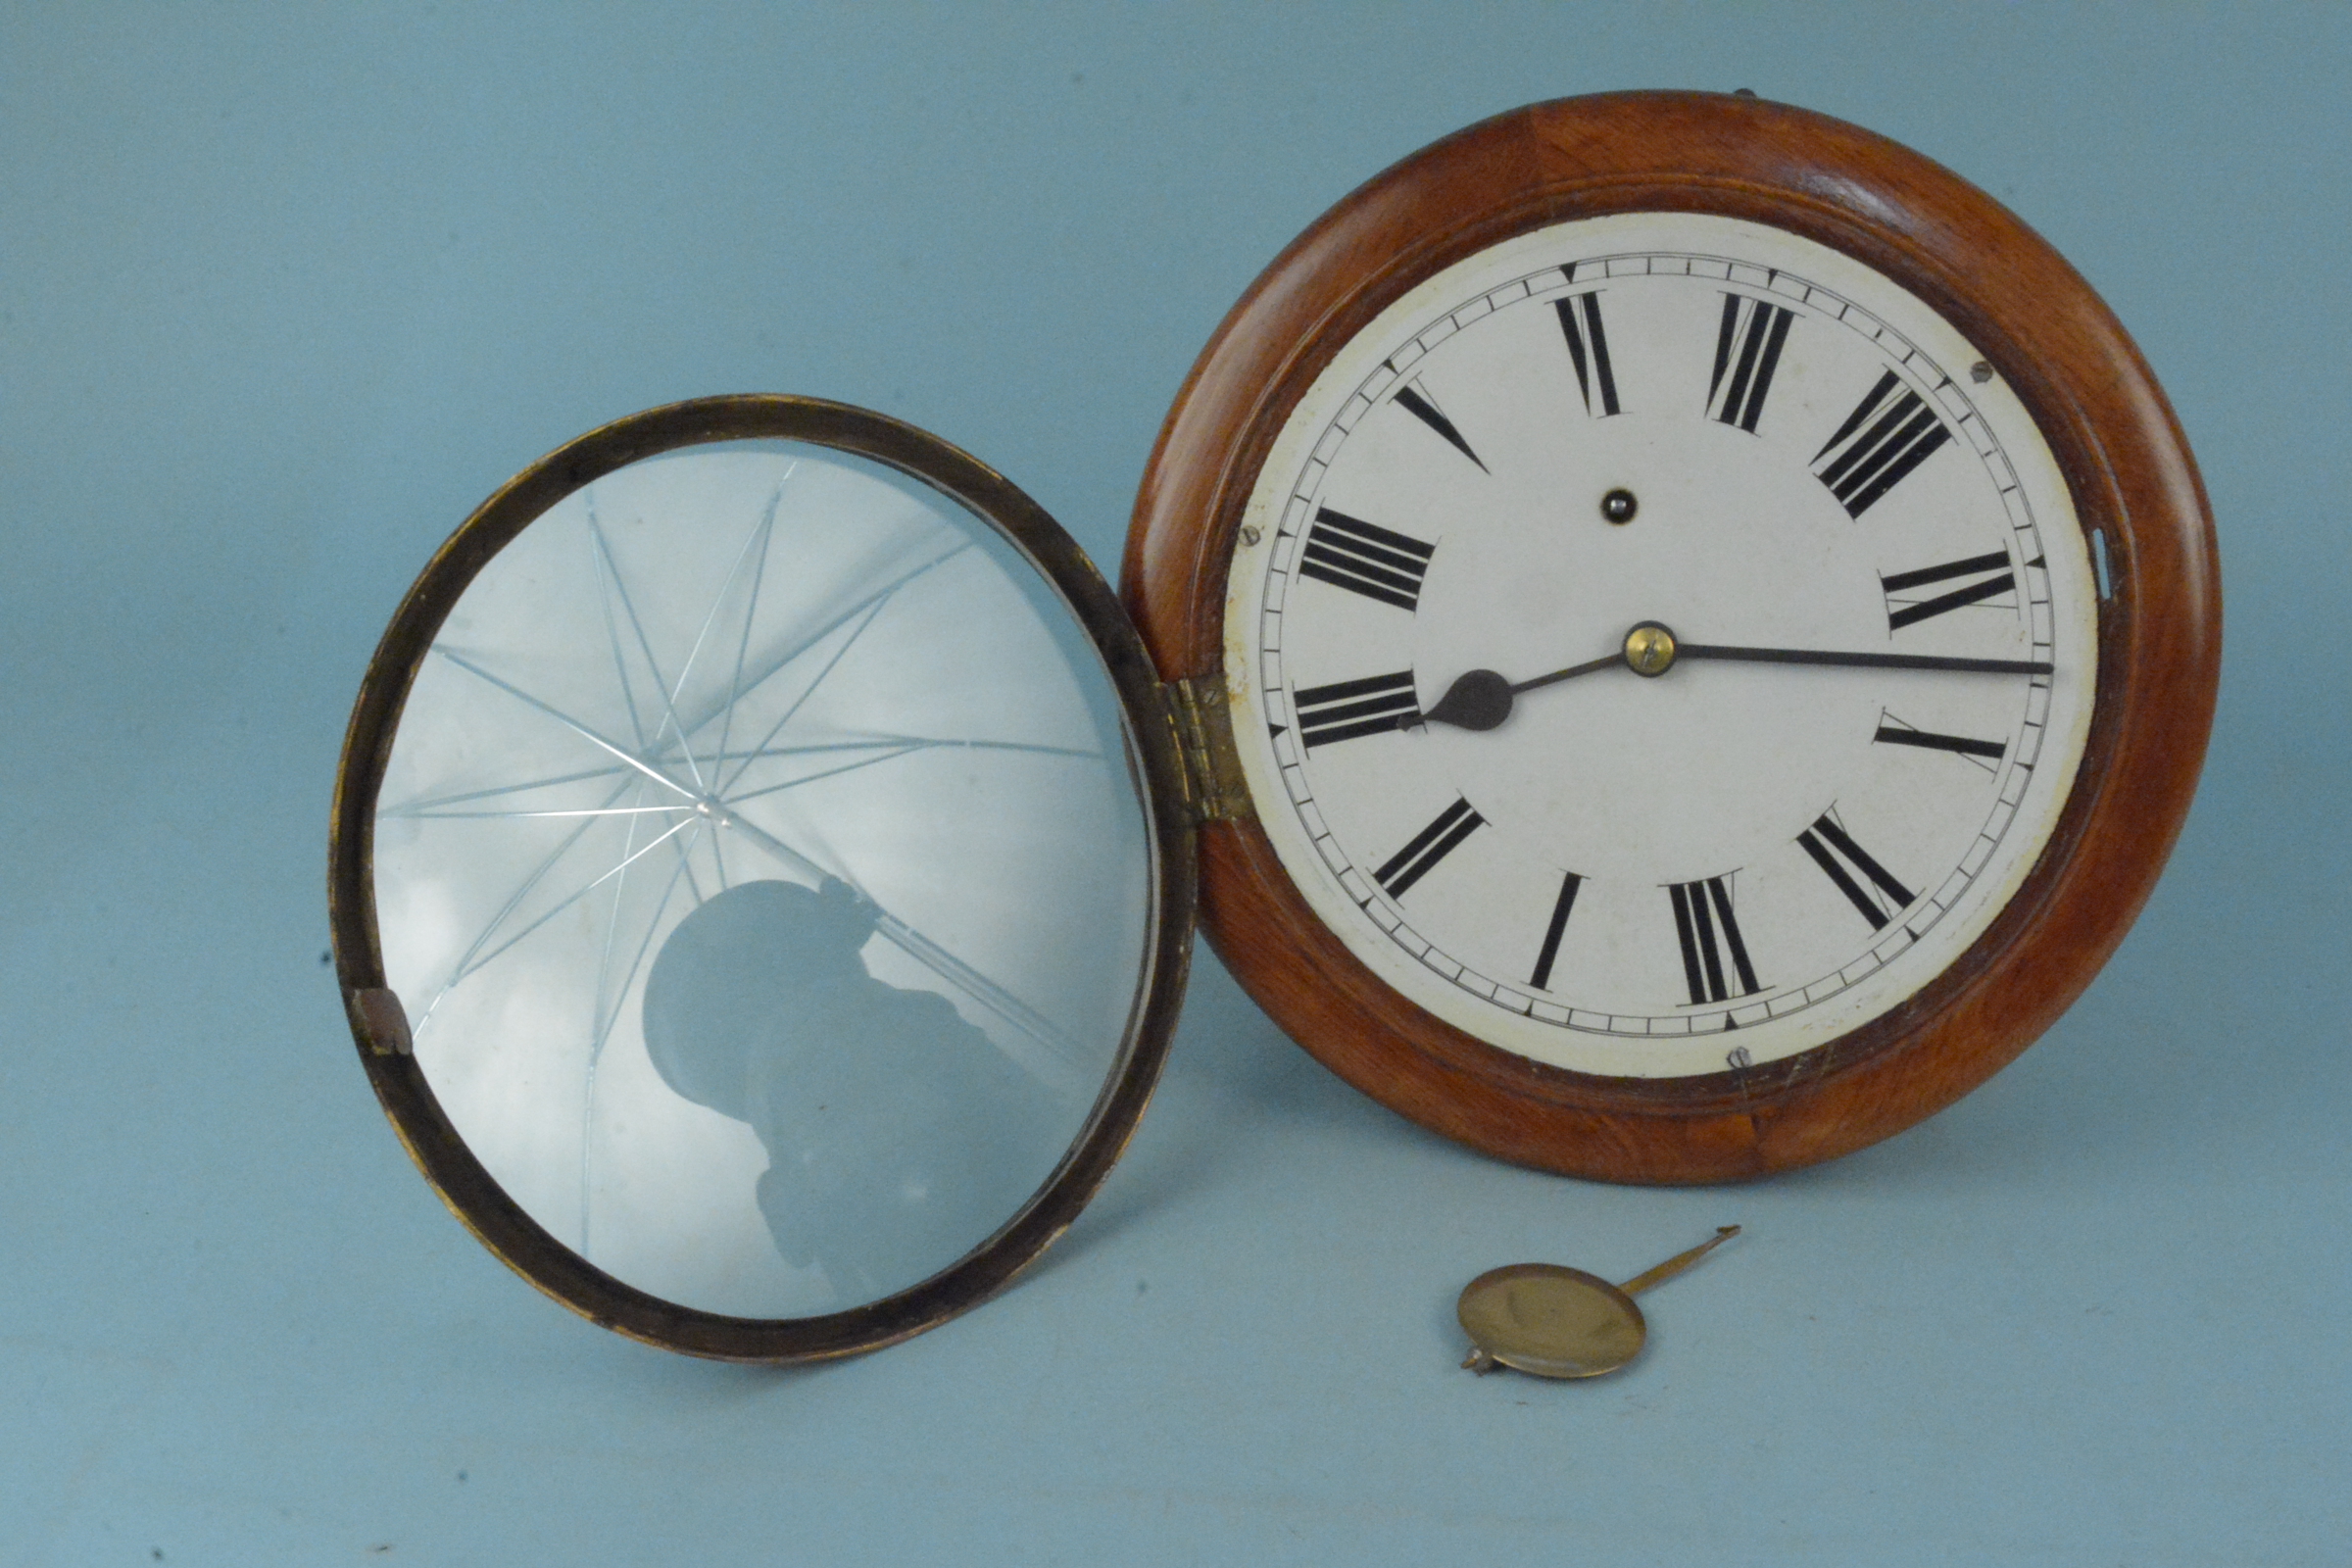 A vintage wooden cased W & H Sch (Winterhalder & Hofmeir of Schwarzenbach) wall clock with pendulum - Image 3 of 3